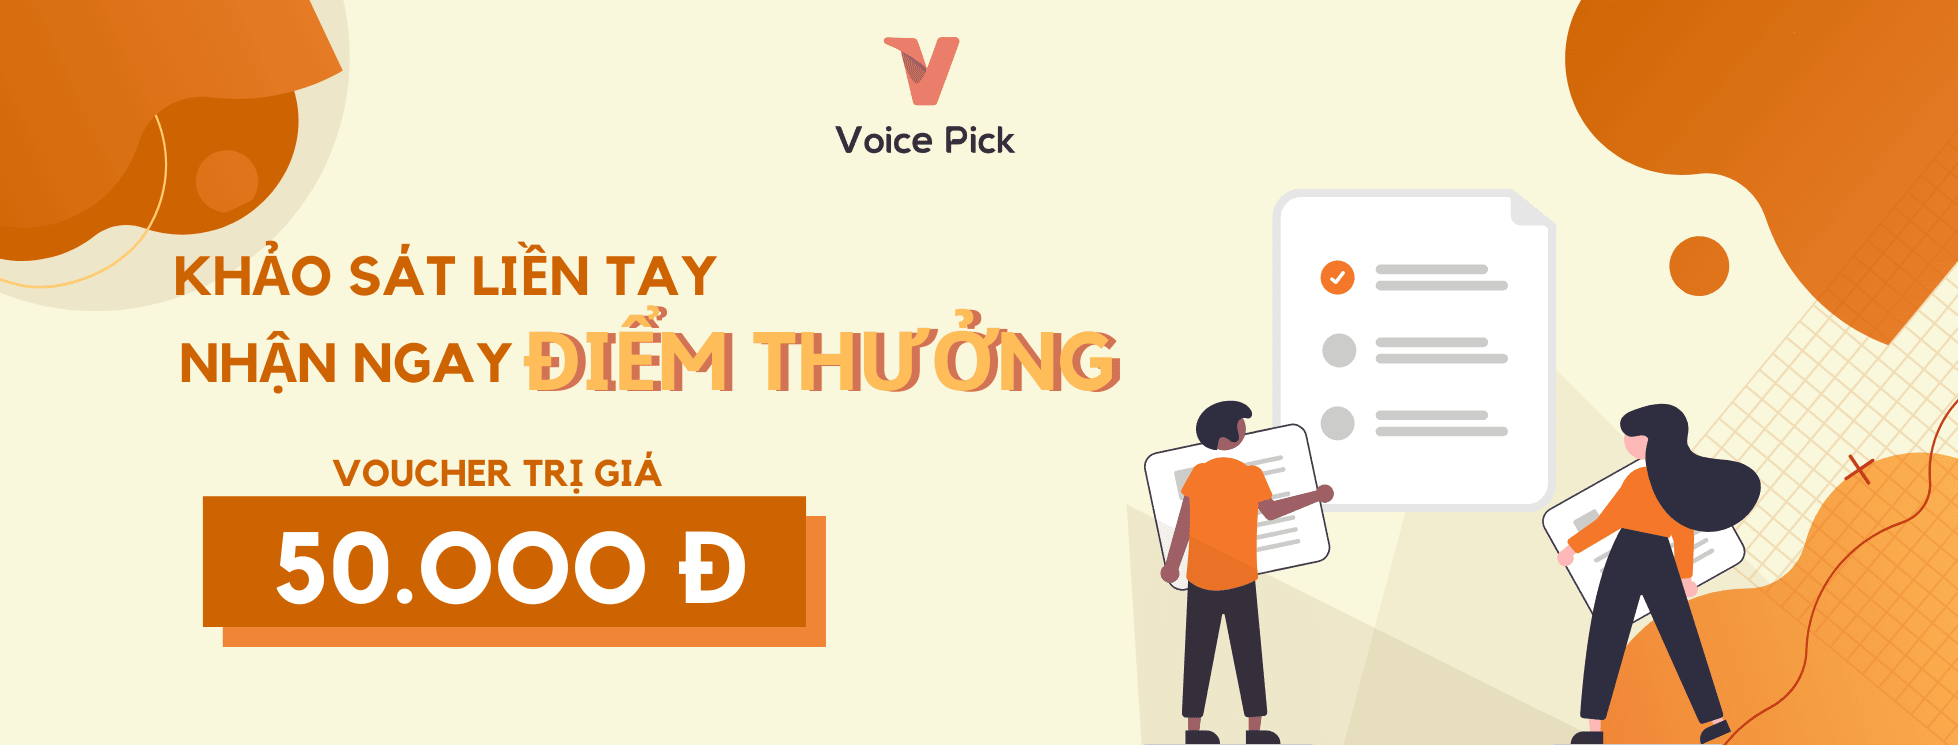 Ứng dụng Voice Pick